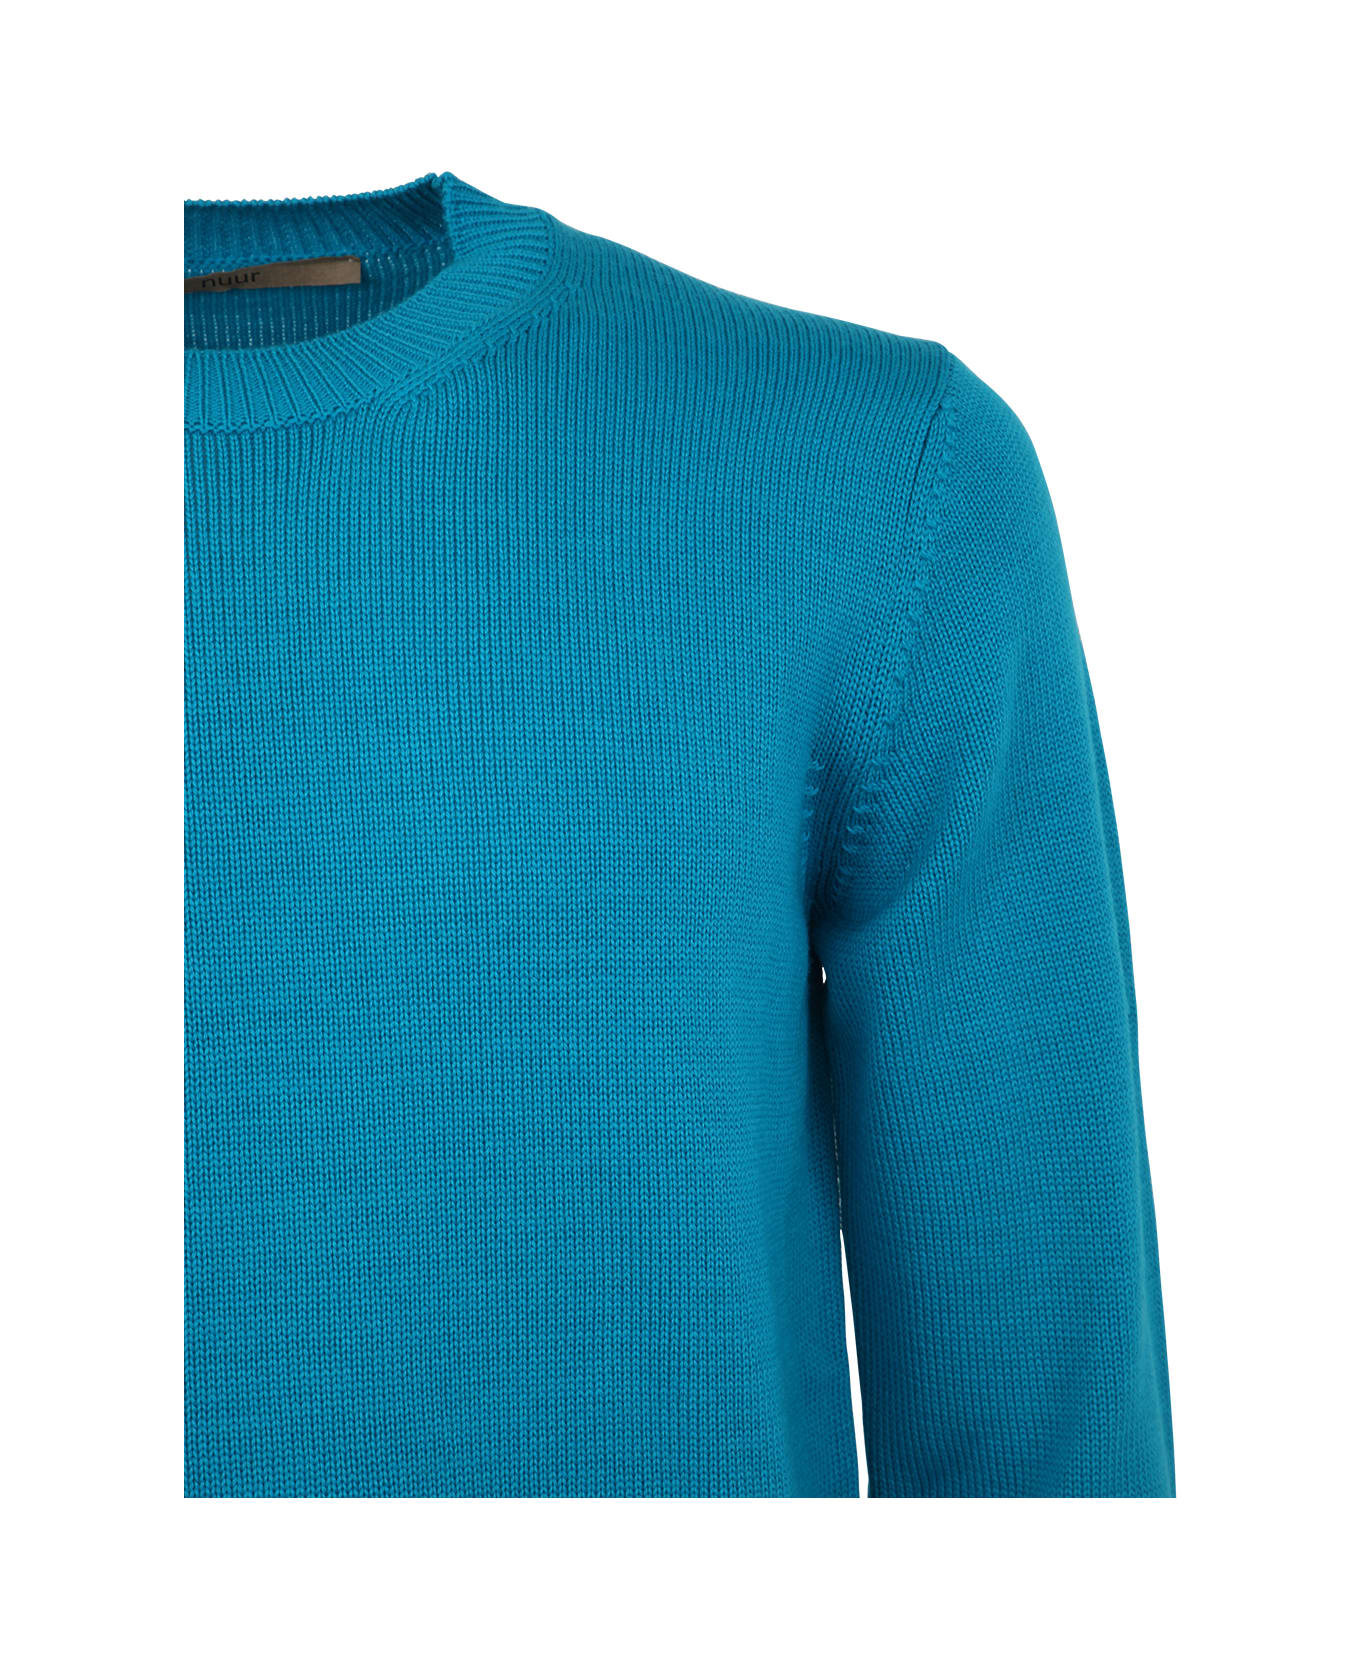 Nuur Long Sleeve Crew Neck Sweater - Turquoise ニットウェア